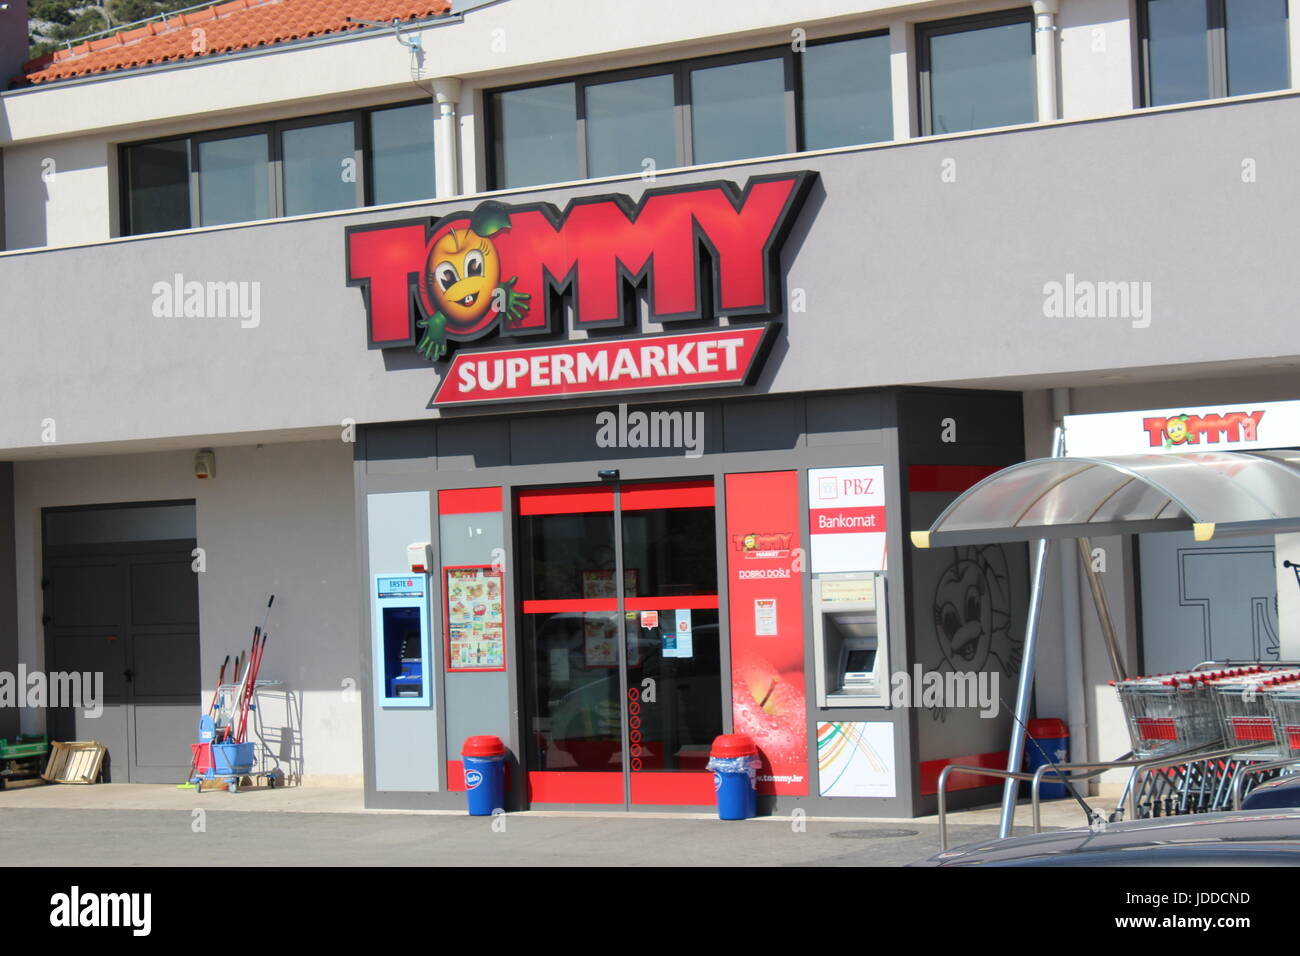 tommy supermarket near me